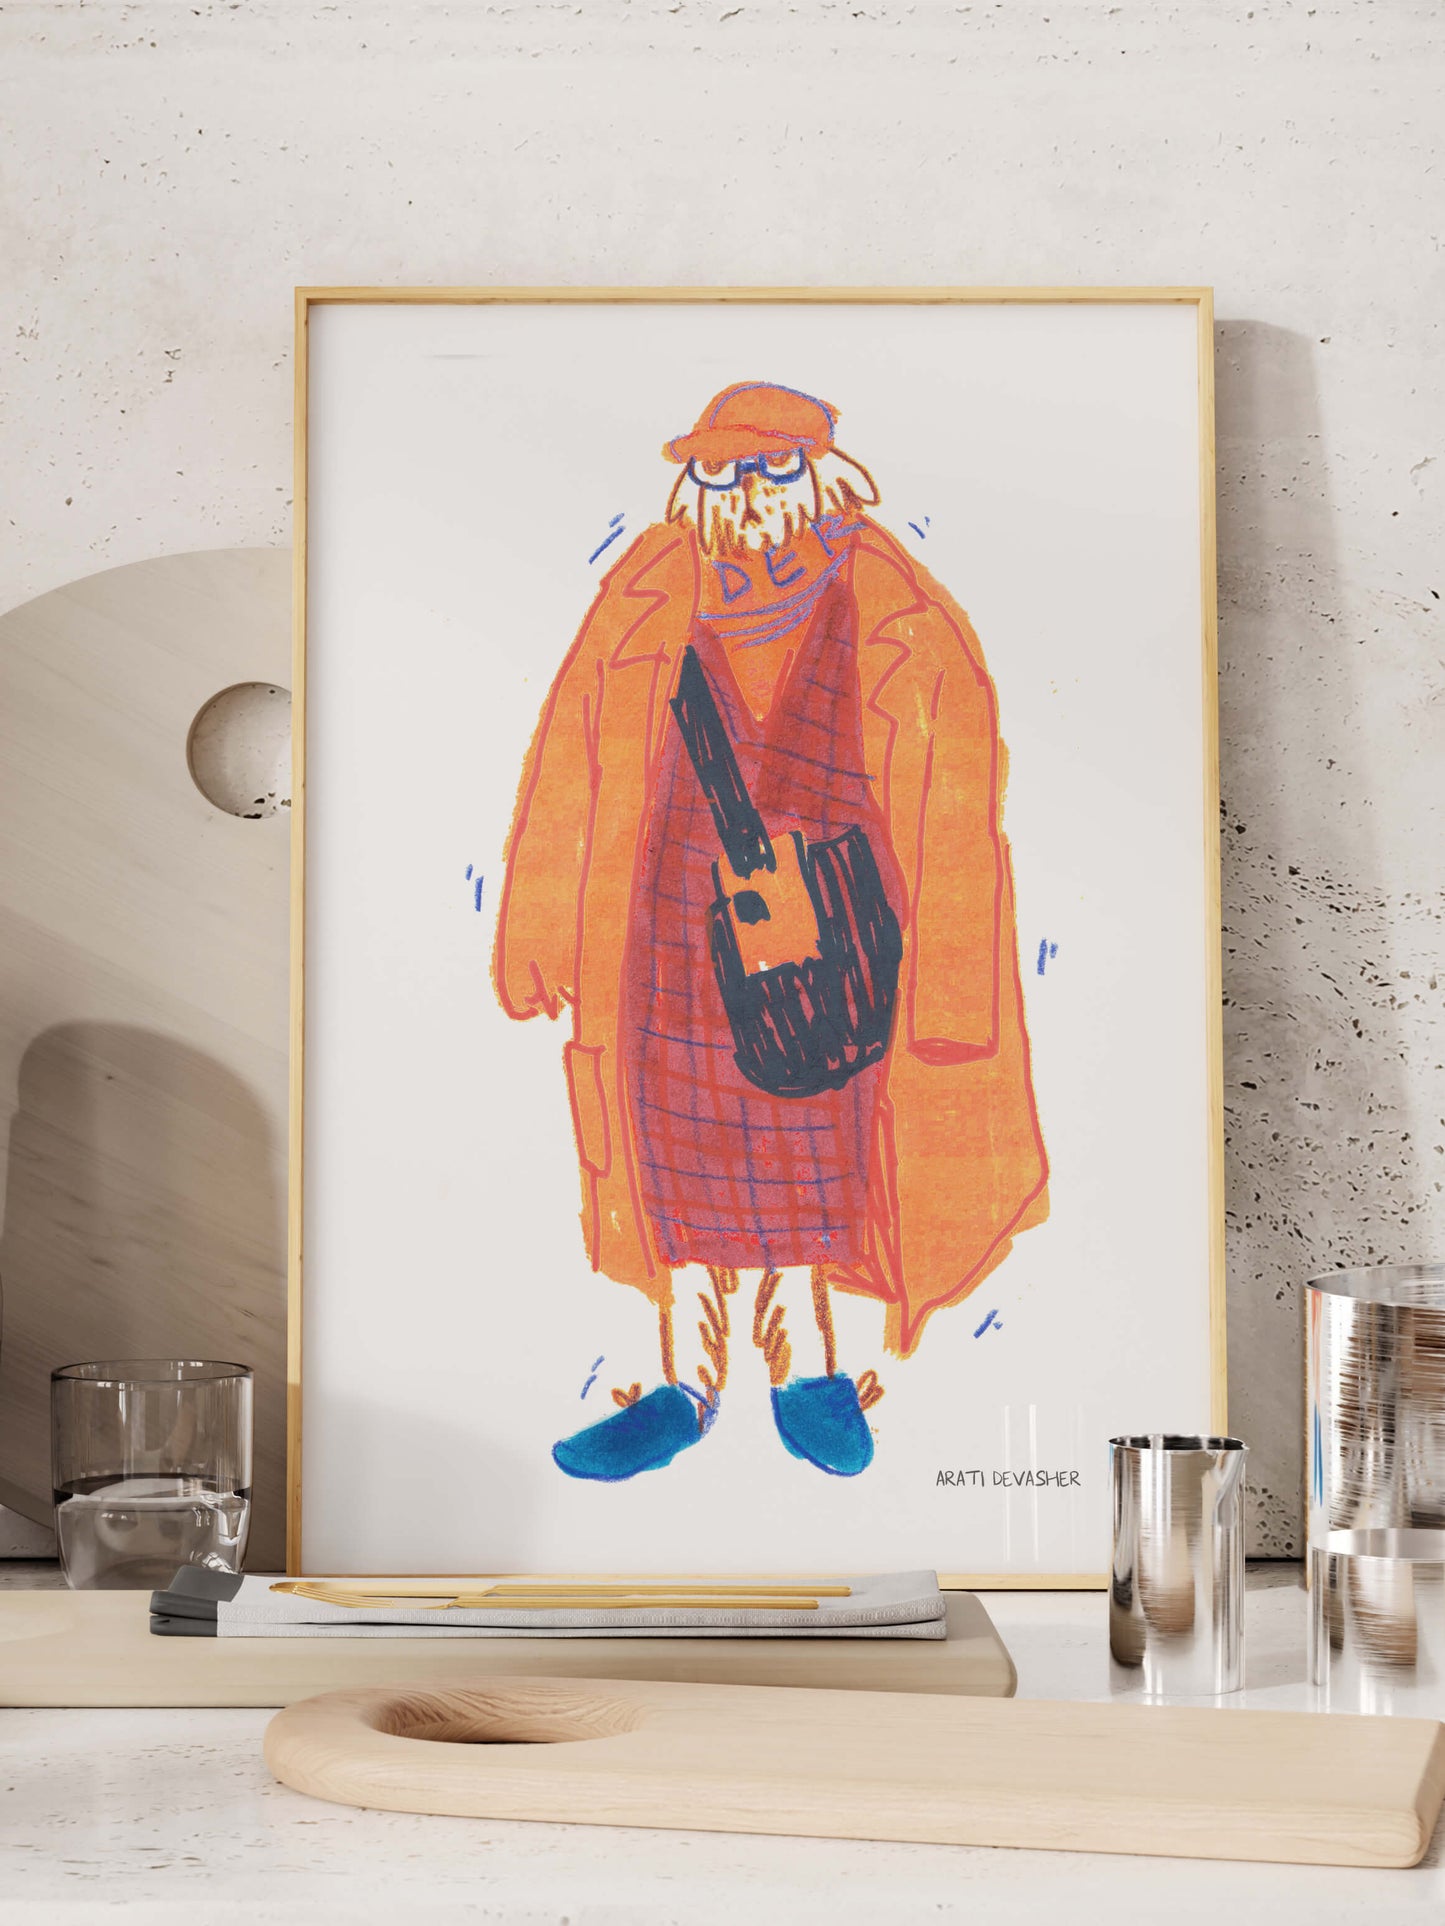 Stylish Dog in an Orange Coat – art print